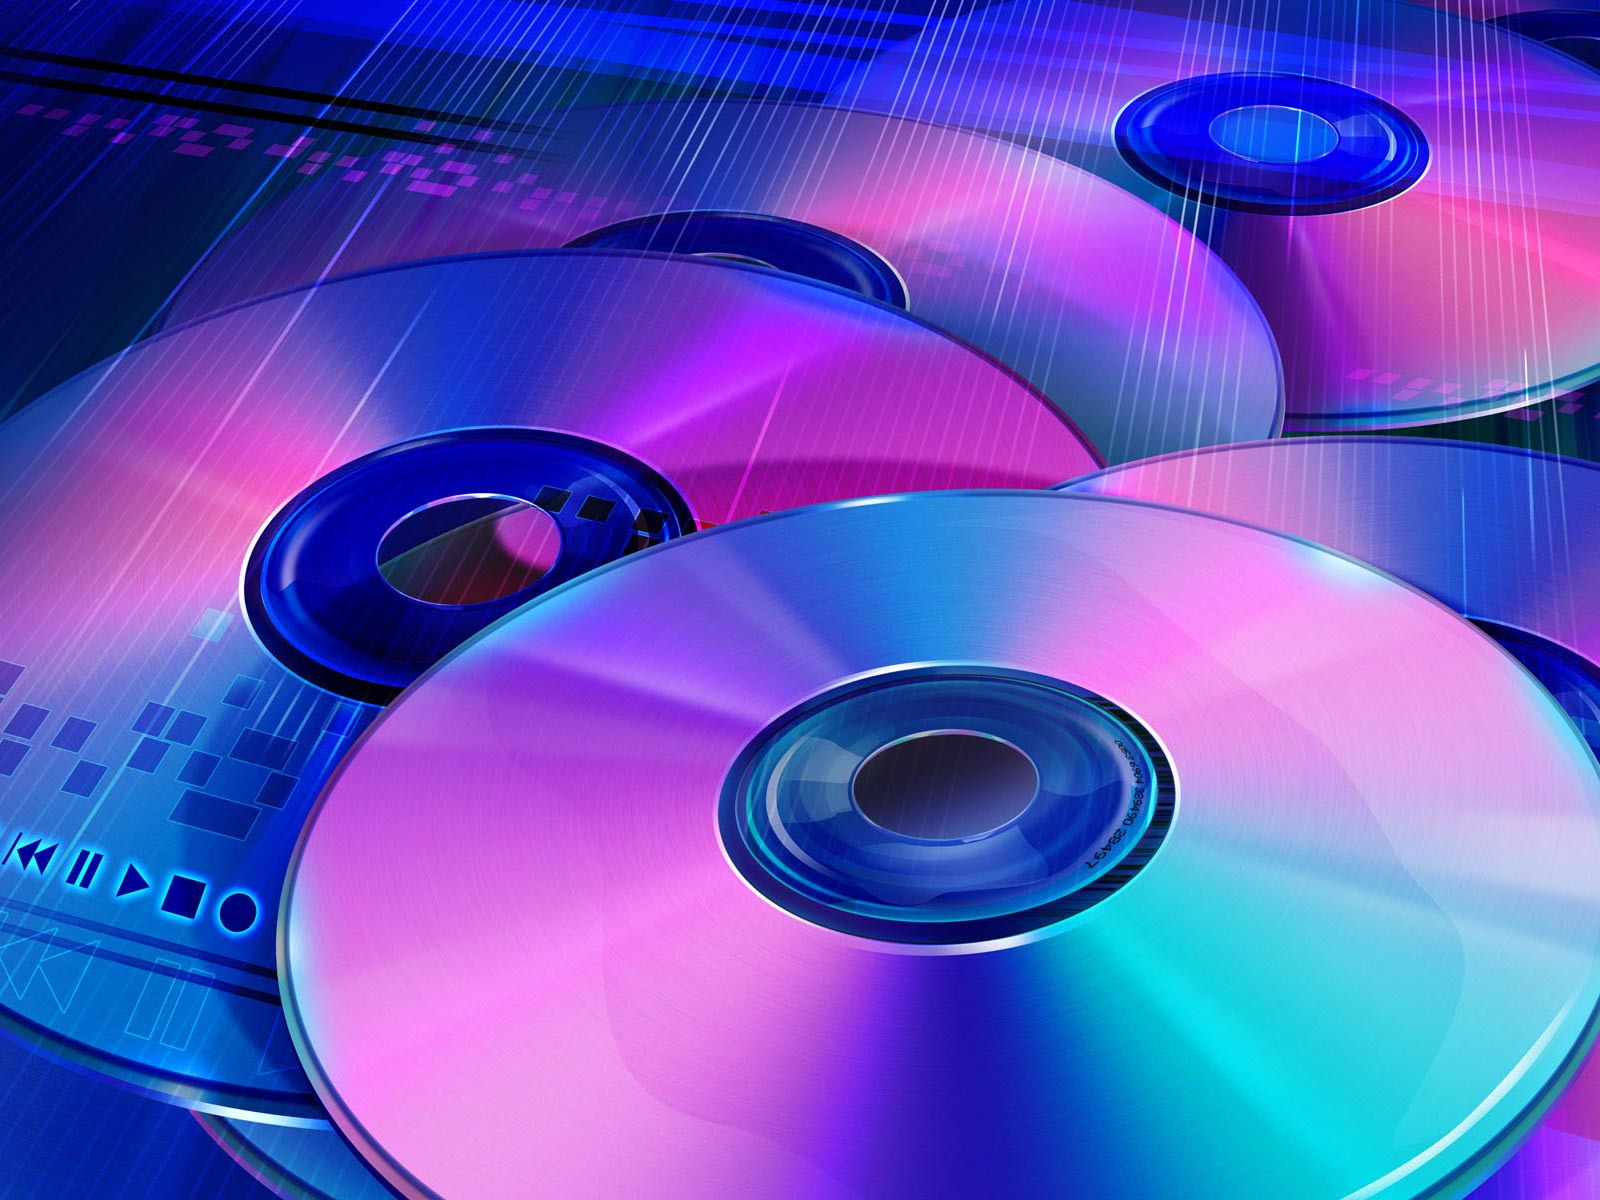 CMC Pro, 52X CD-R, White Inkjet Hub Printable, 600 Disc Tape Wrap, Valueline